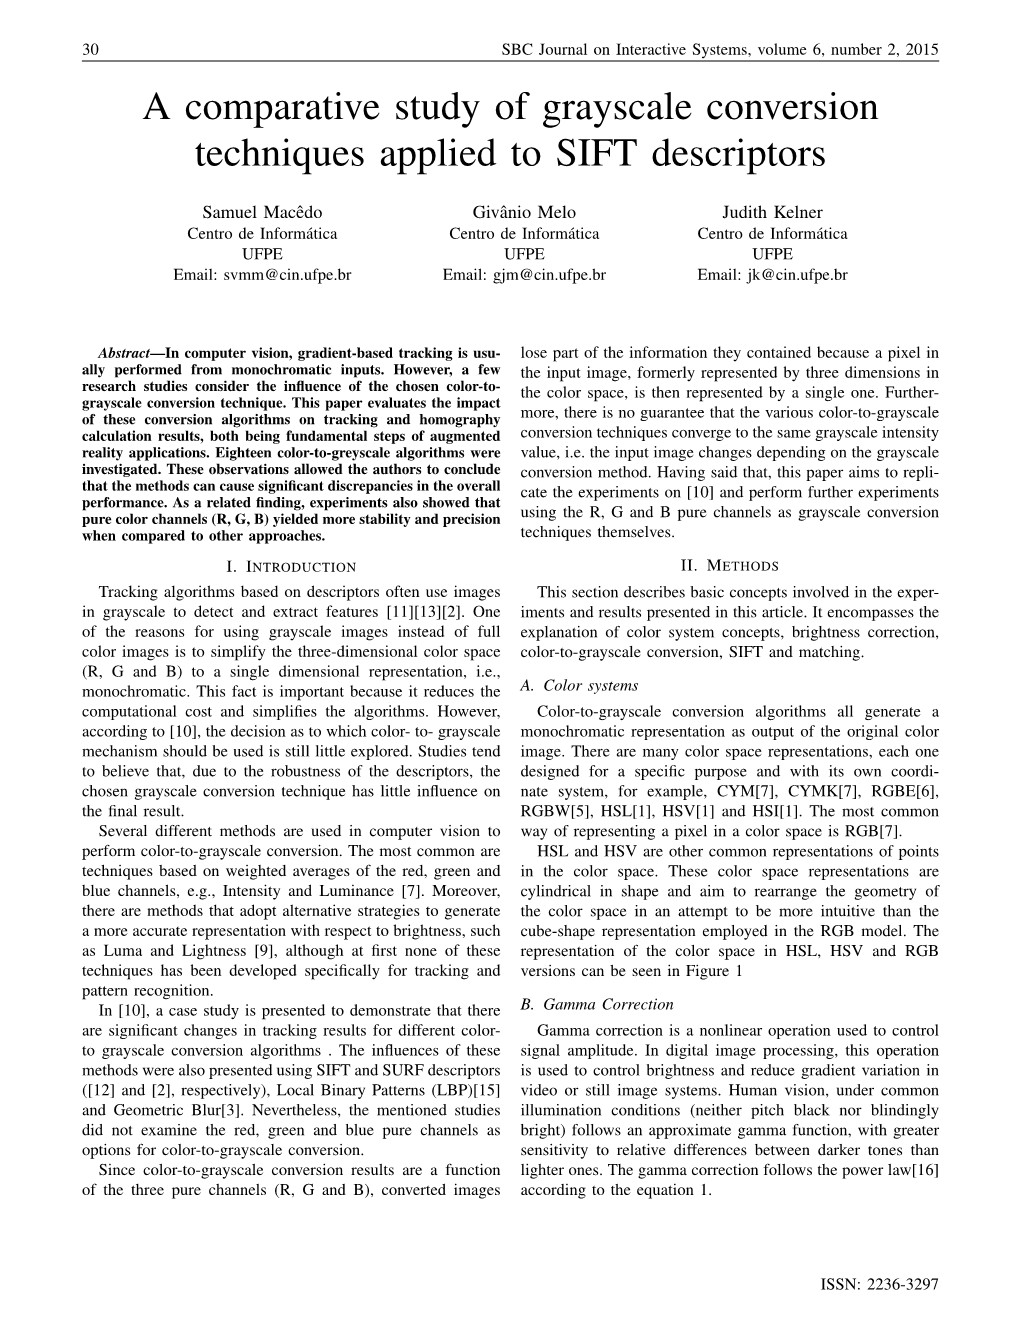 A Comparative Study of Grayscale Conversion Techniques Applied to SIFT Descriptors